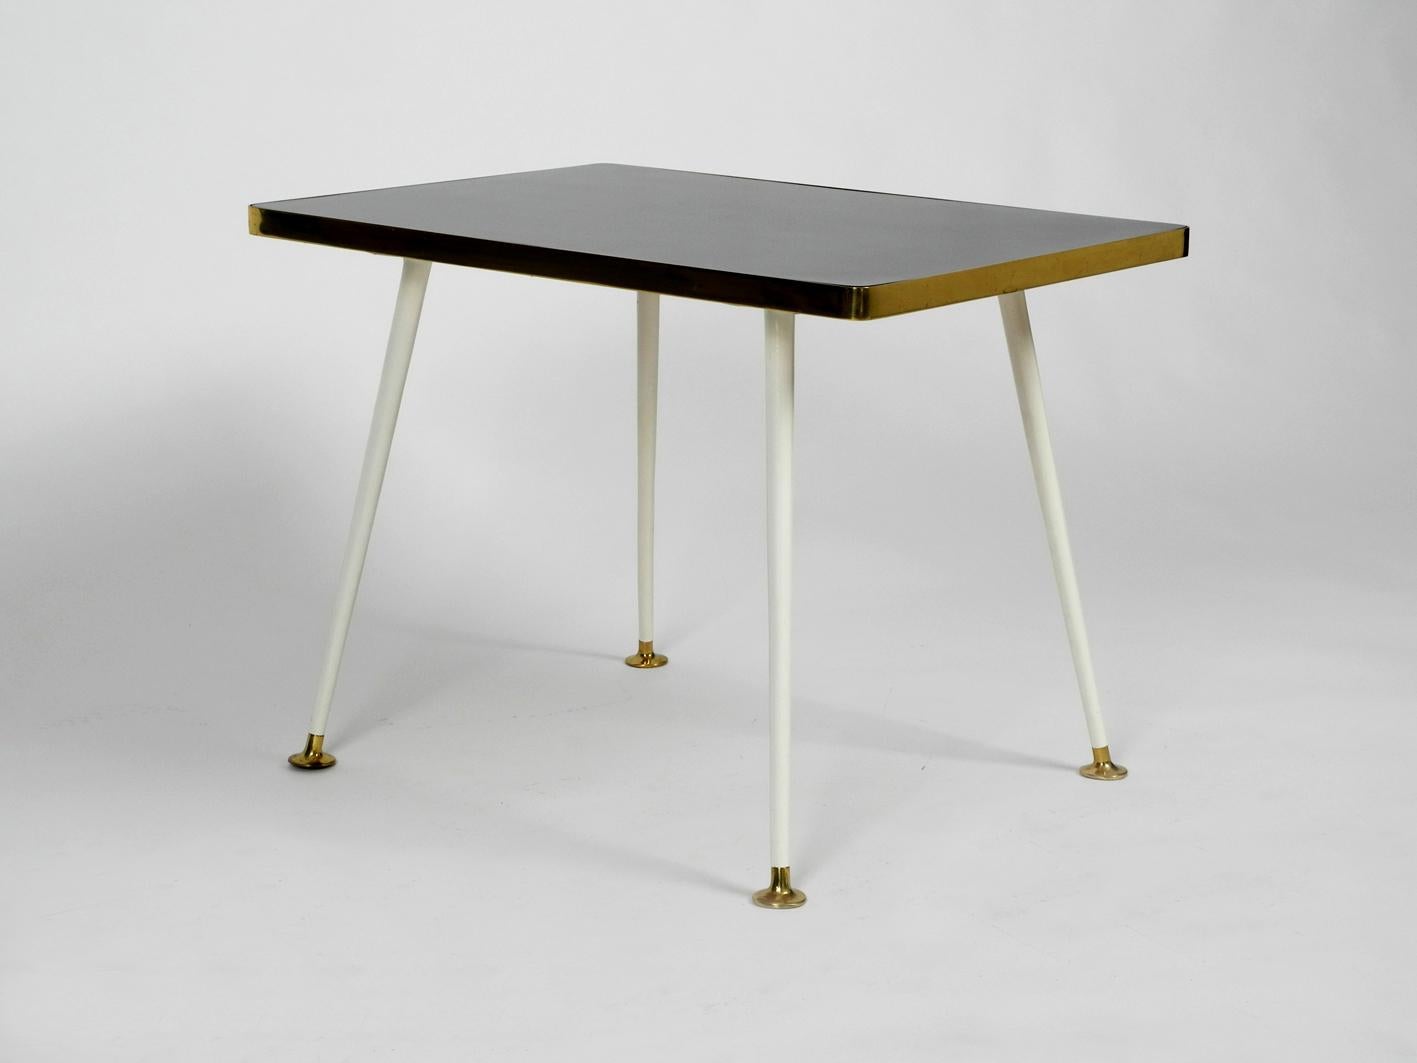 German Vereinigte Werkstätten Mid-Century Modernist Side Table Made of Wood and Metal